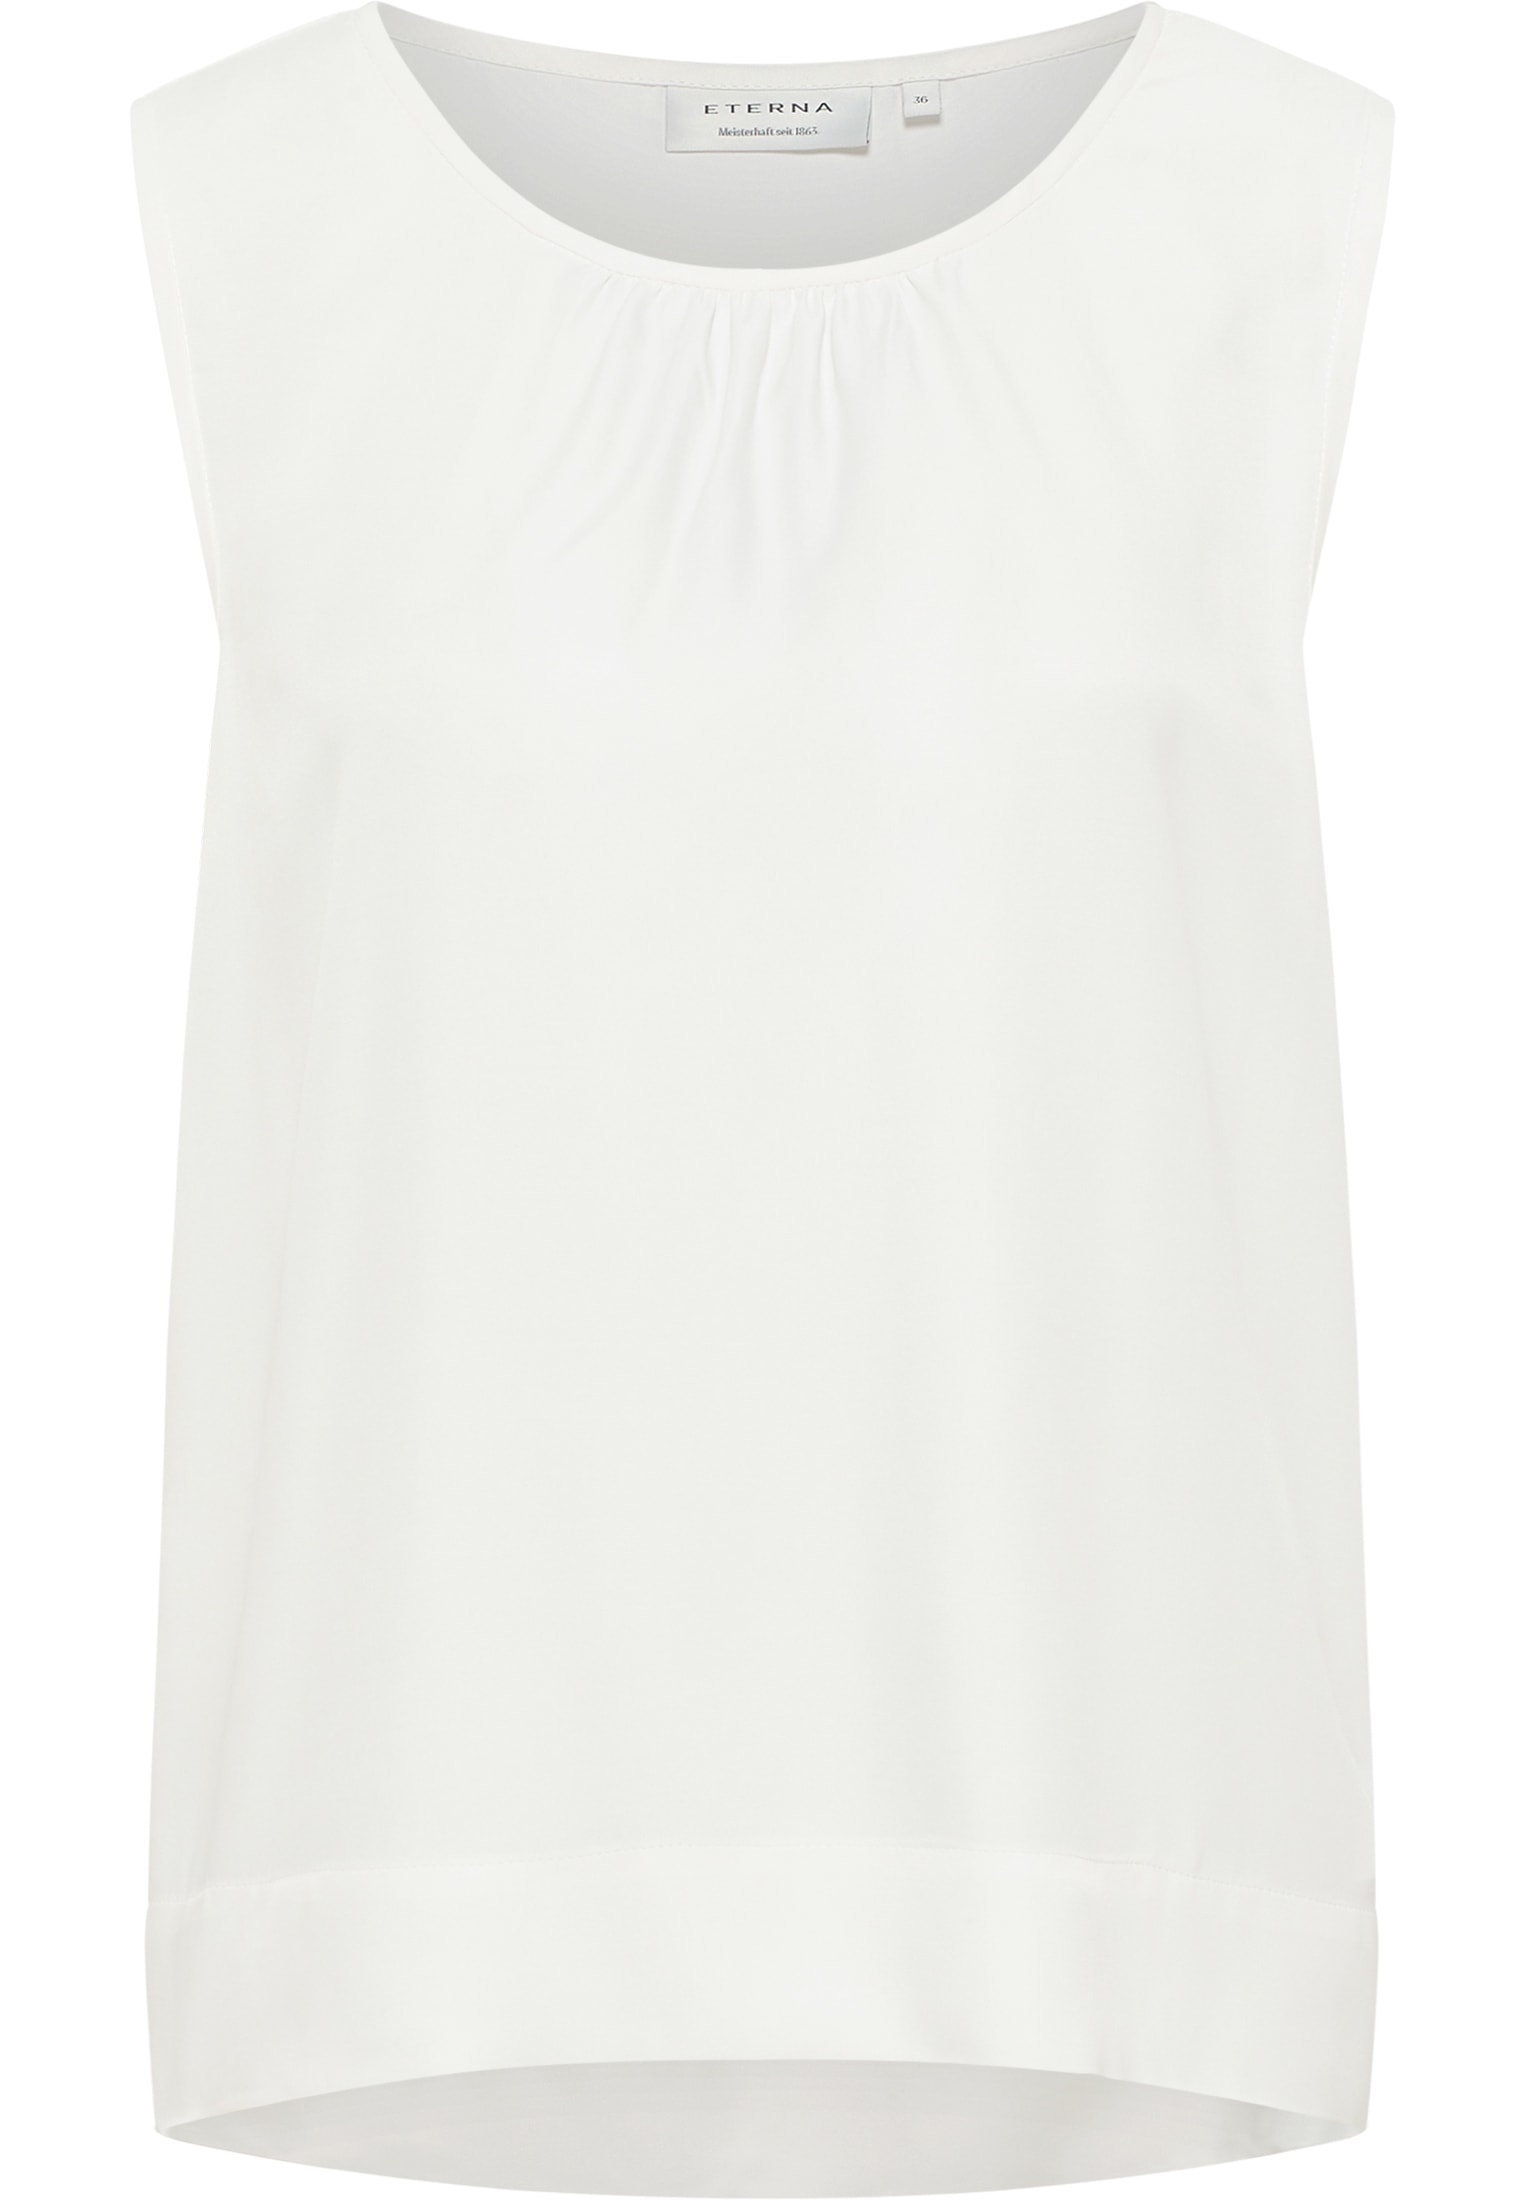 Viscose Shirt Bluse in off-white 36 | unifarben | | ohne Arm 2BL04345-00-02-36-sl | off-white